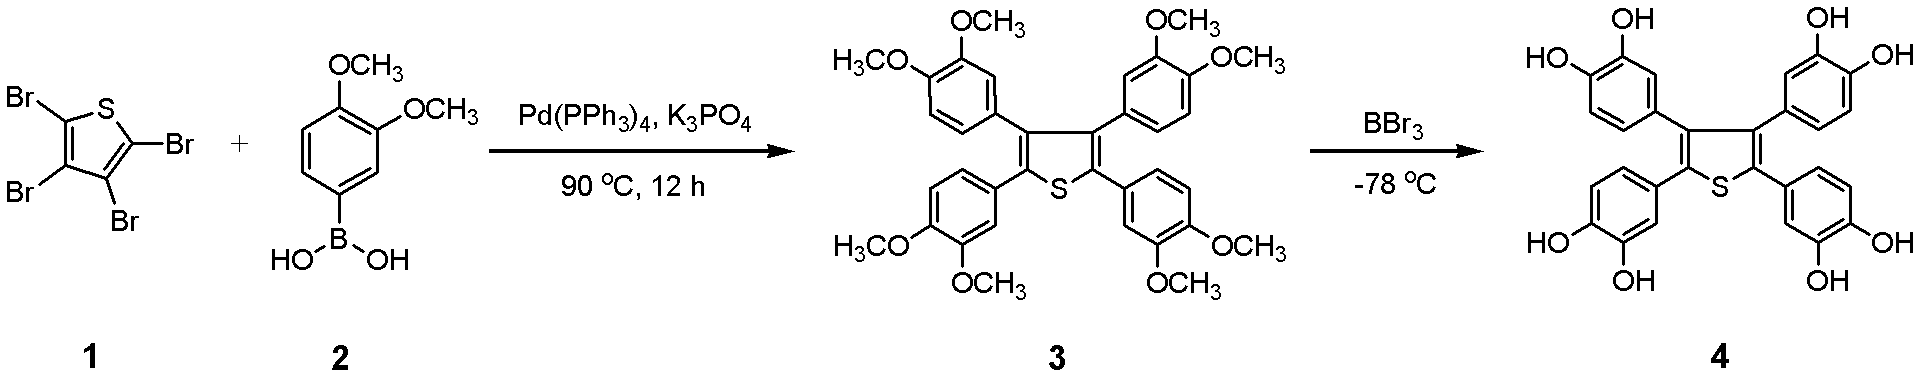 2,3,4,5,-tetra(3',4'-dihydroxyl phenyl)thiophene and application thereof as MALDI (matrix assisted laser desorption ionization) matrix in analyzing small molecules